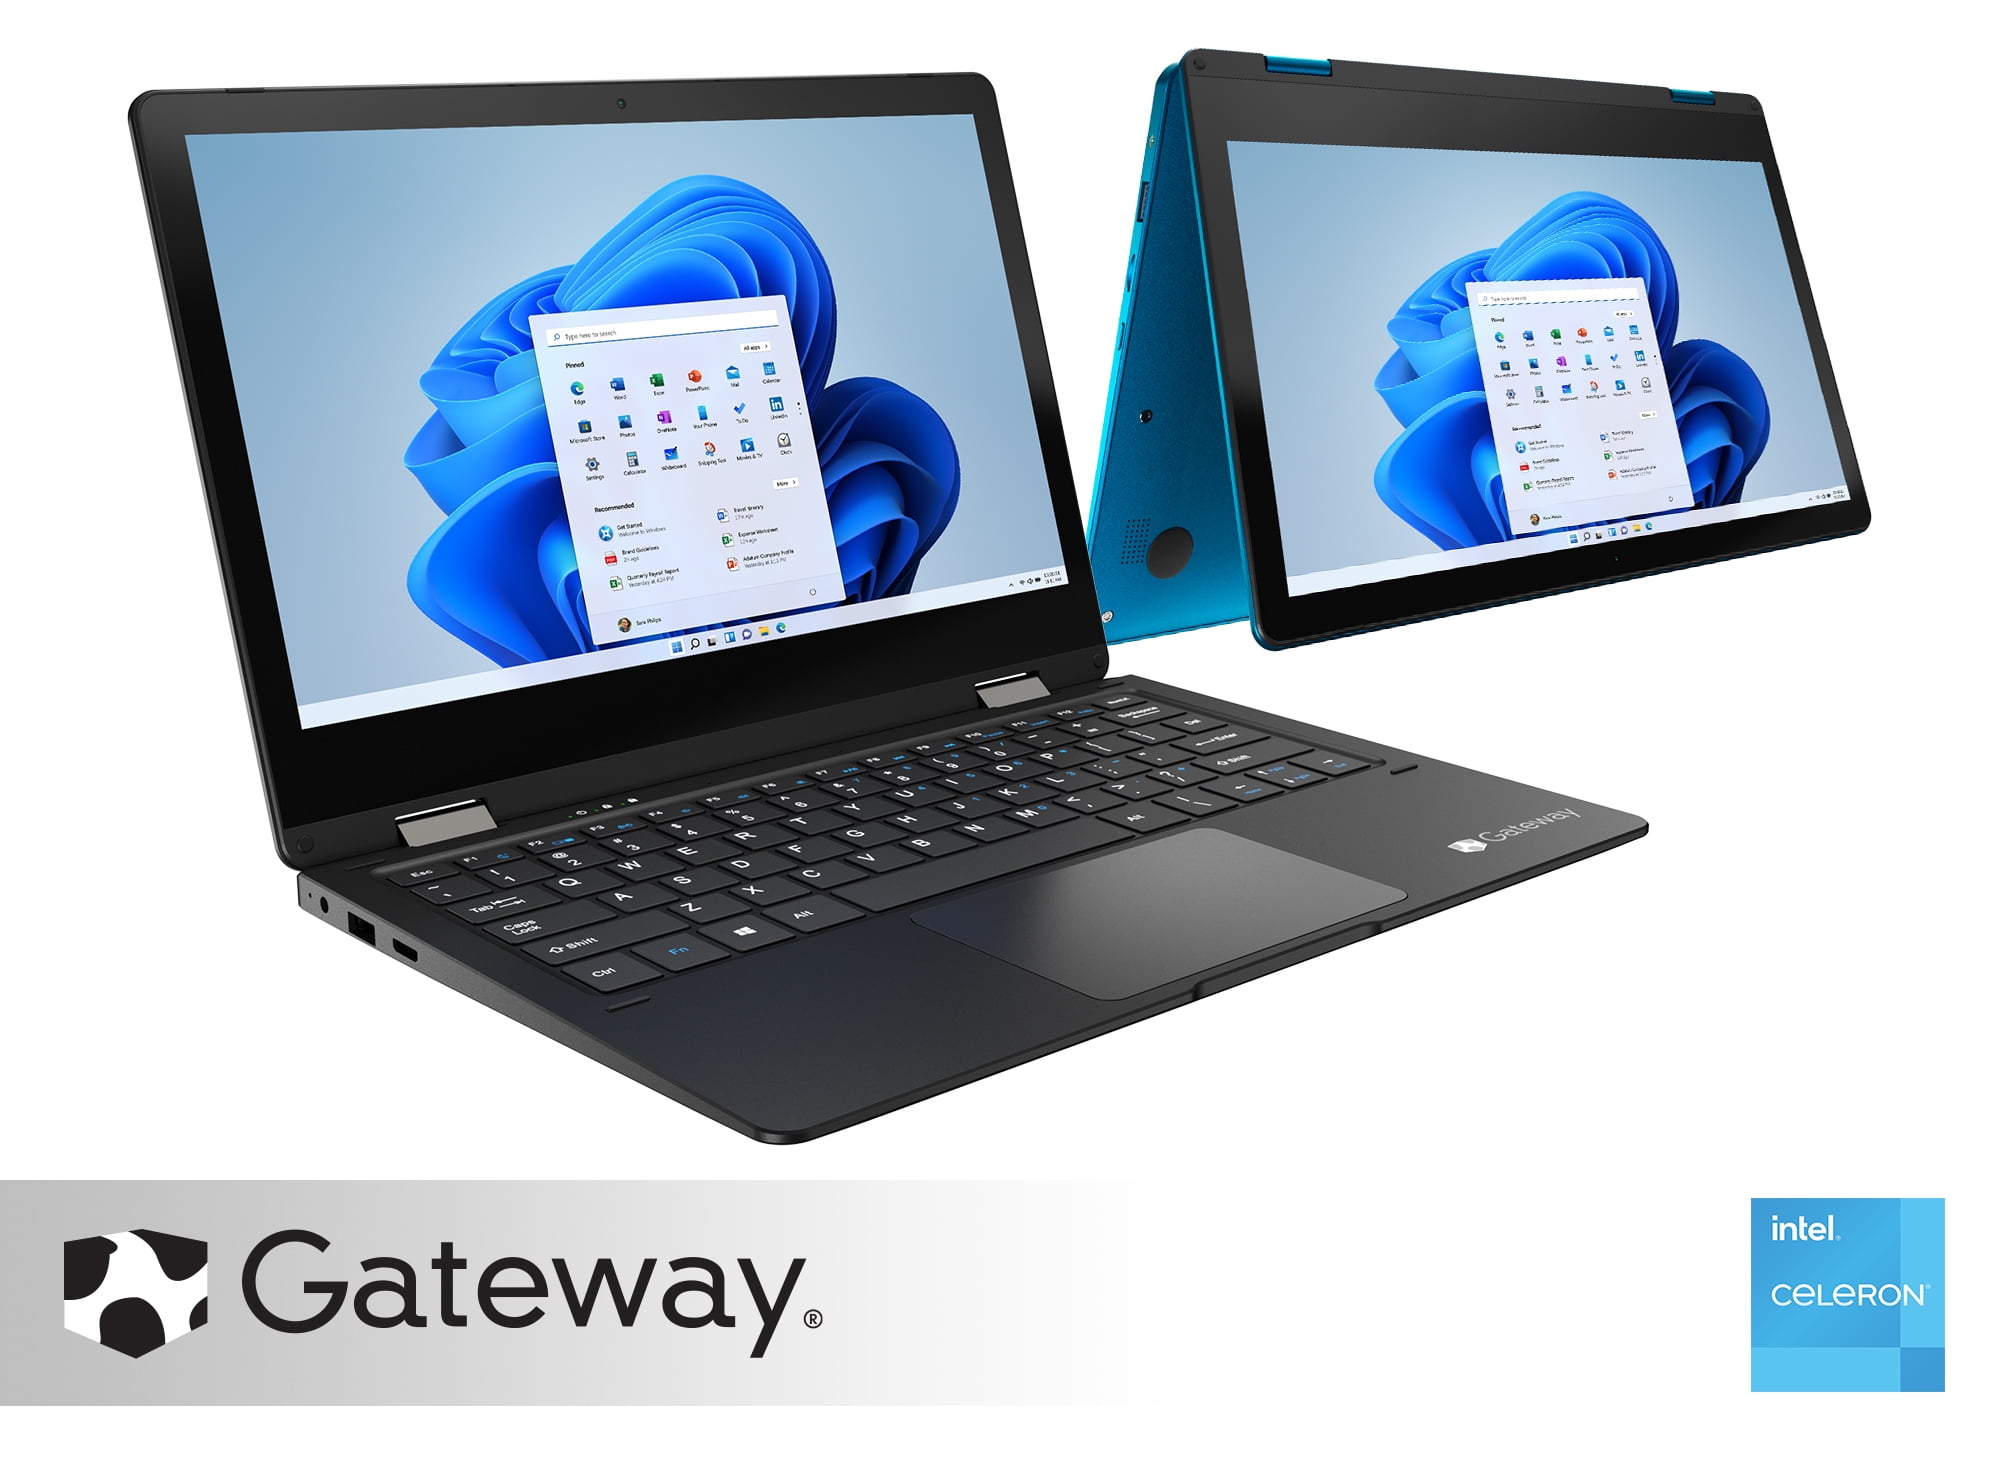 klein Beneden afronden Voel me slecht Gateway Notebook 11.6" Touchscreen 2-in-1s Laptop, Intel Celeron N4020, 4GB  RAM, 64GB HD, Windows 10 Home, Black, GWTC116-2BK - Walmart.com